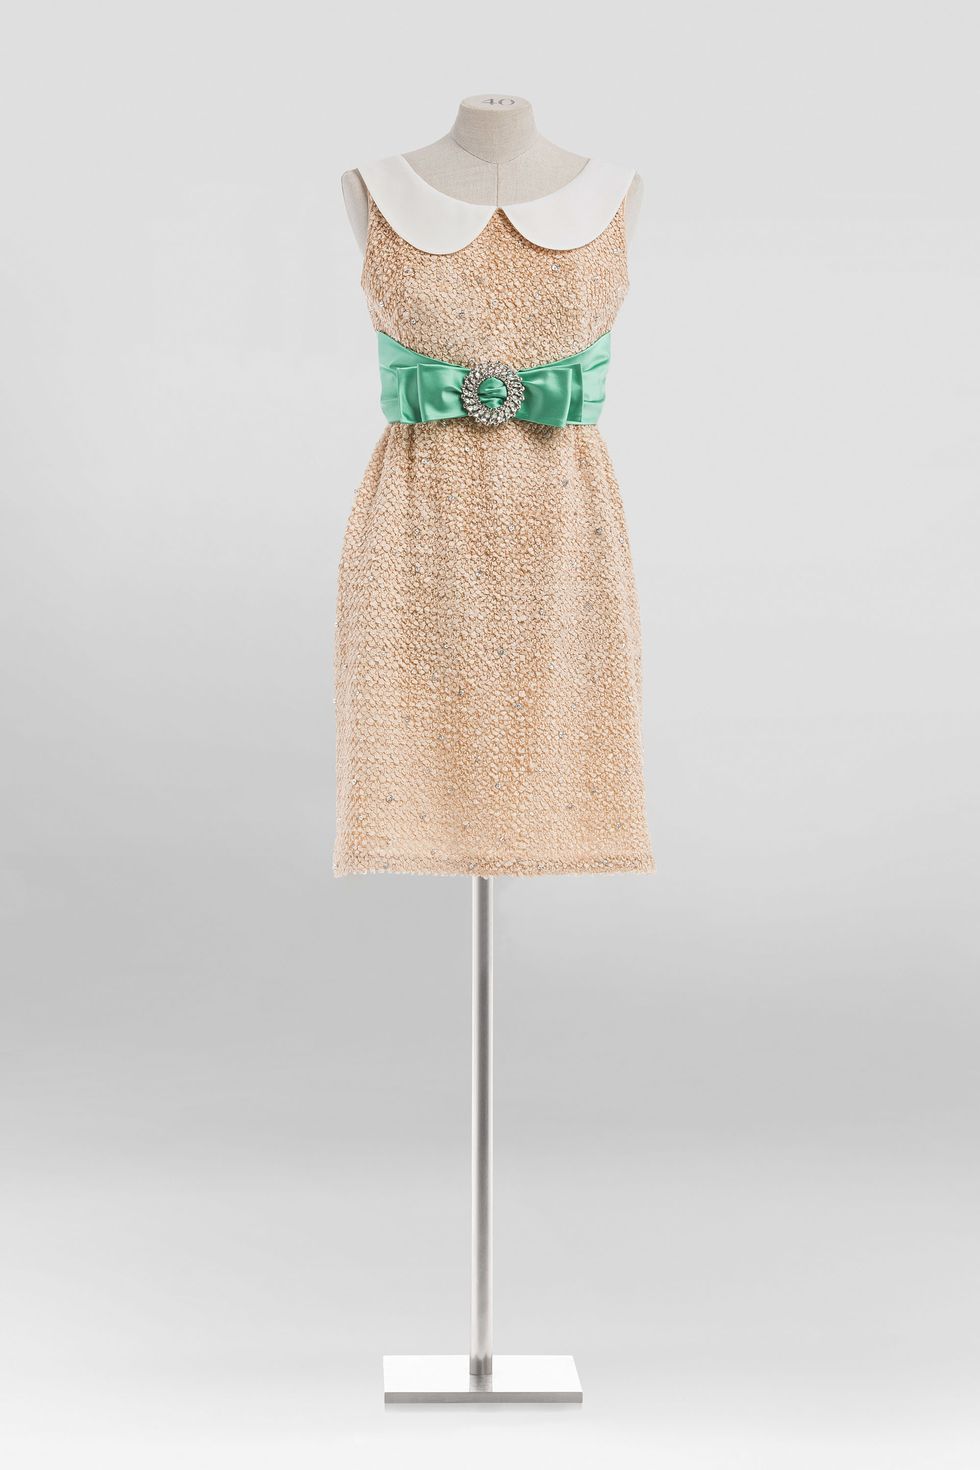 Miu Miu Bow-Detail Sleeveless Dress